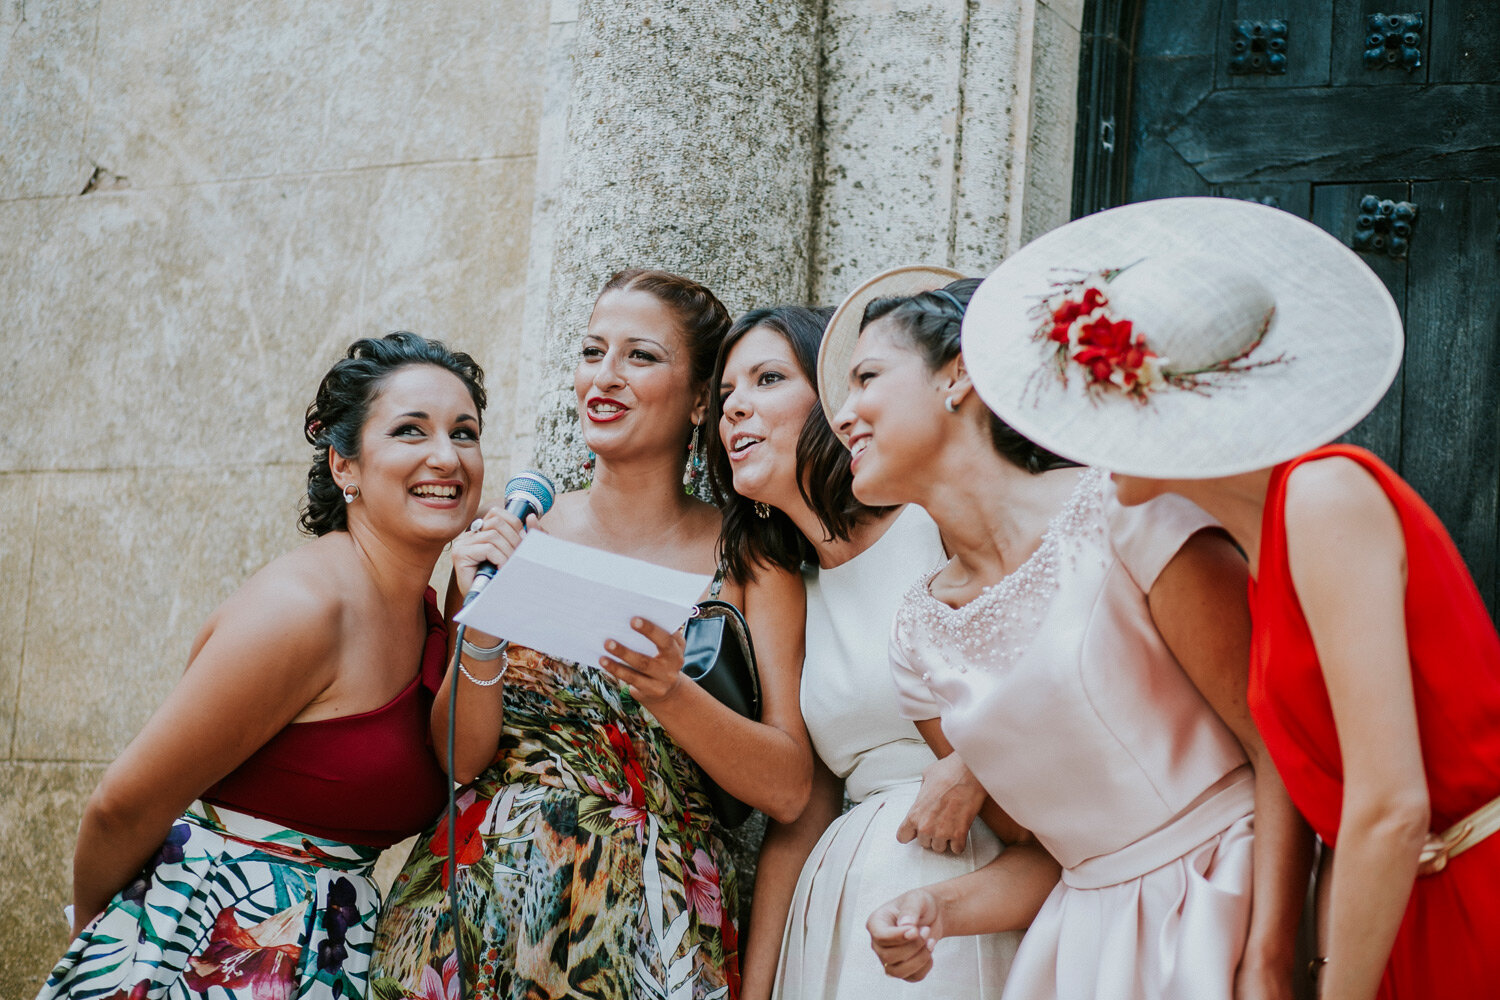 104-vilayvidal-fotografia-bodas-gandia-valencia-alicante-boda-Sandra-Beltran-Finca-Torrefiel-Valencia.jpg